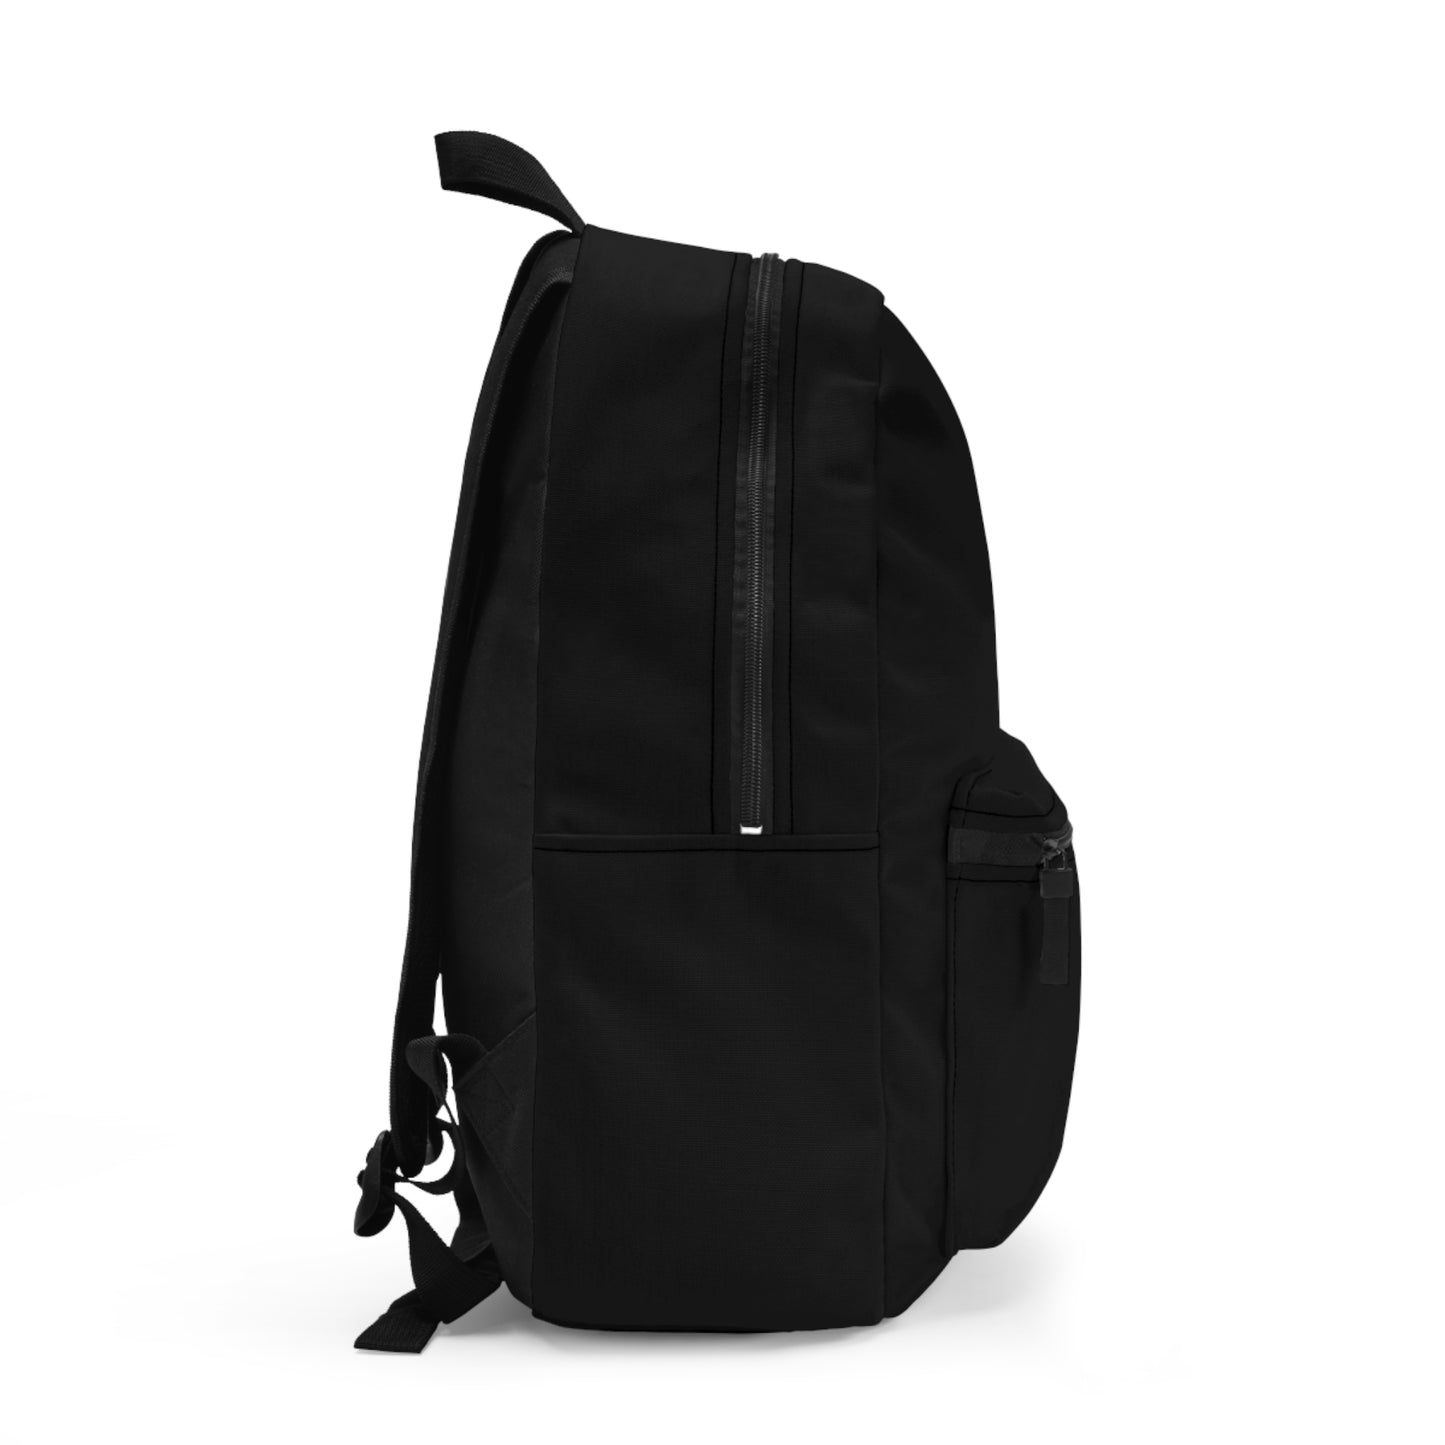 Calabasas Backpack (Black)